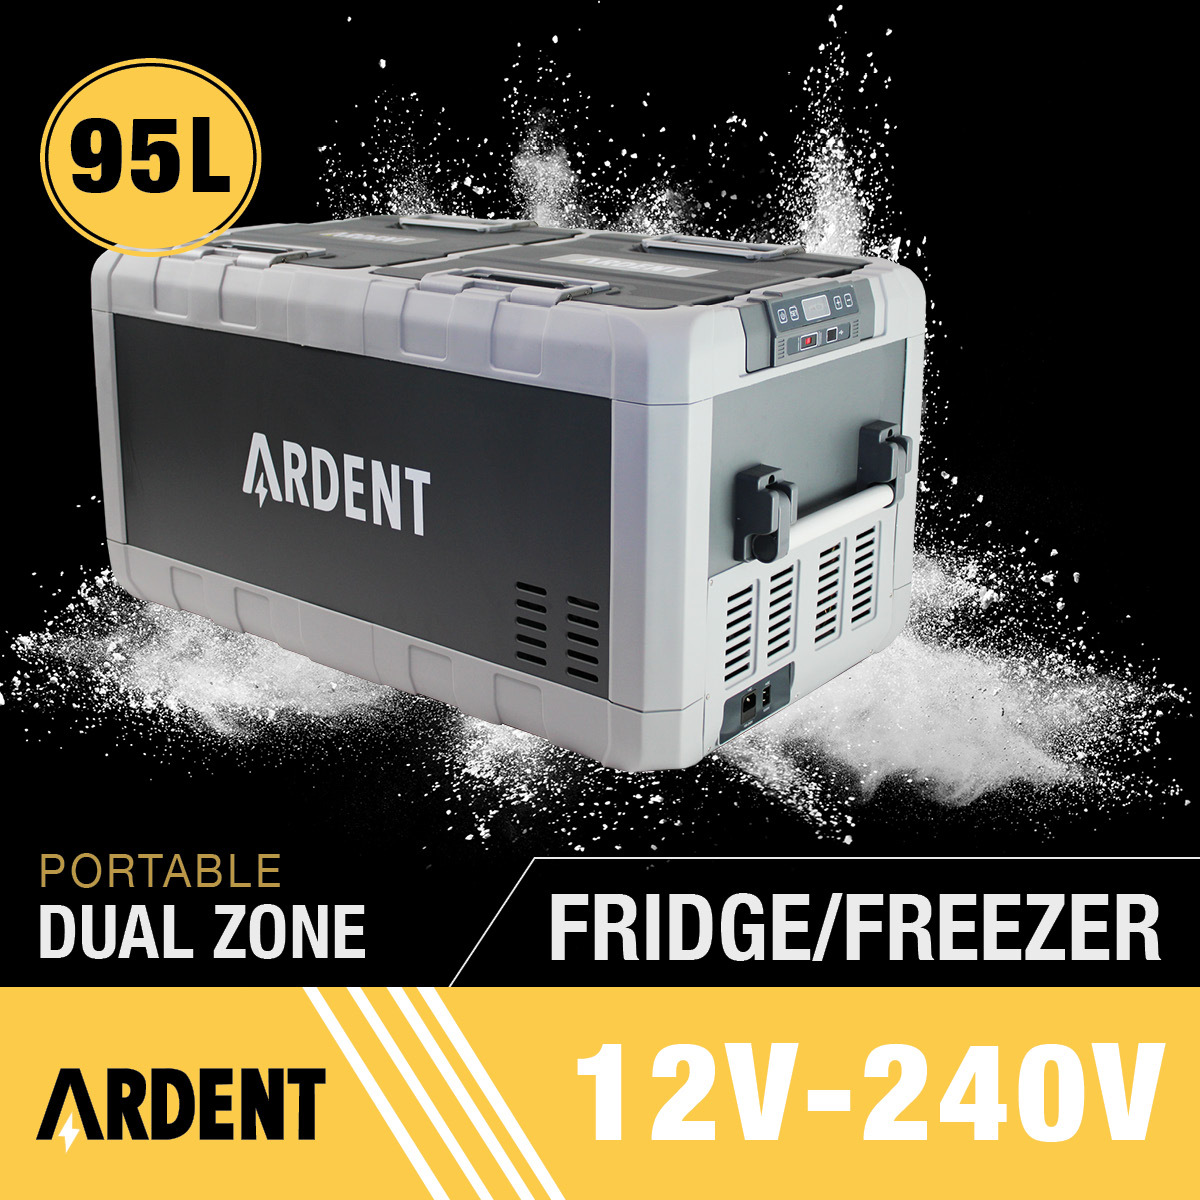 95L Dual Zone Portable Camping Fridge Freezer